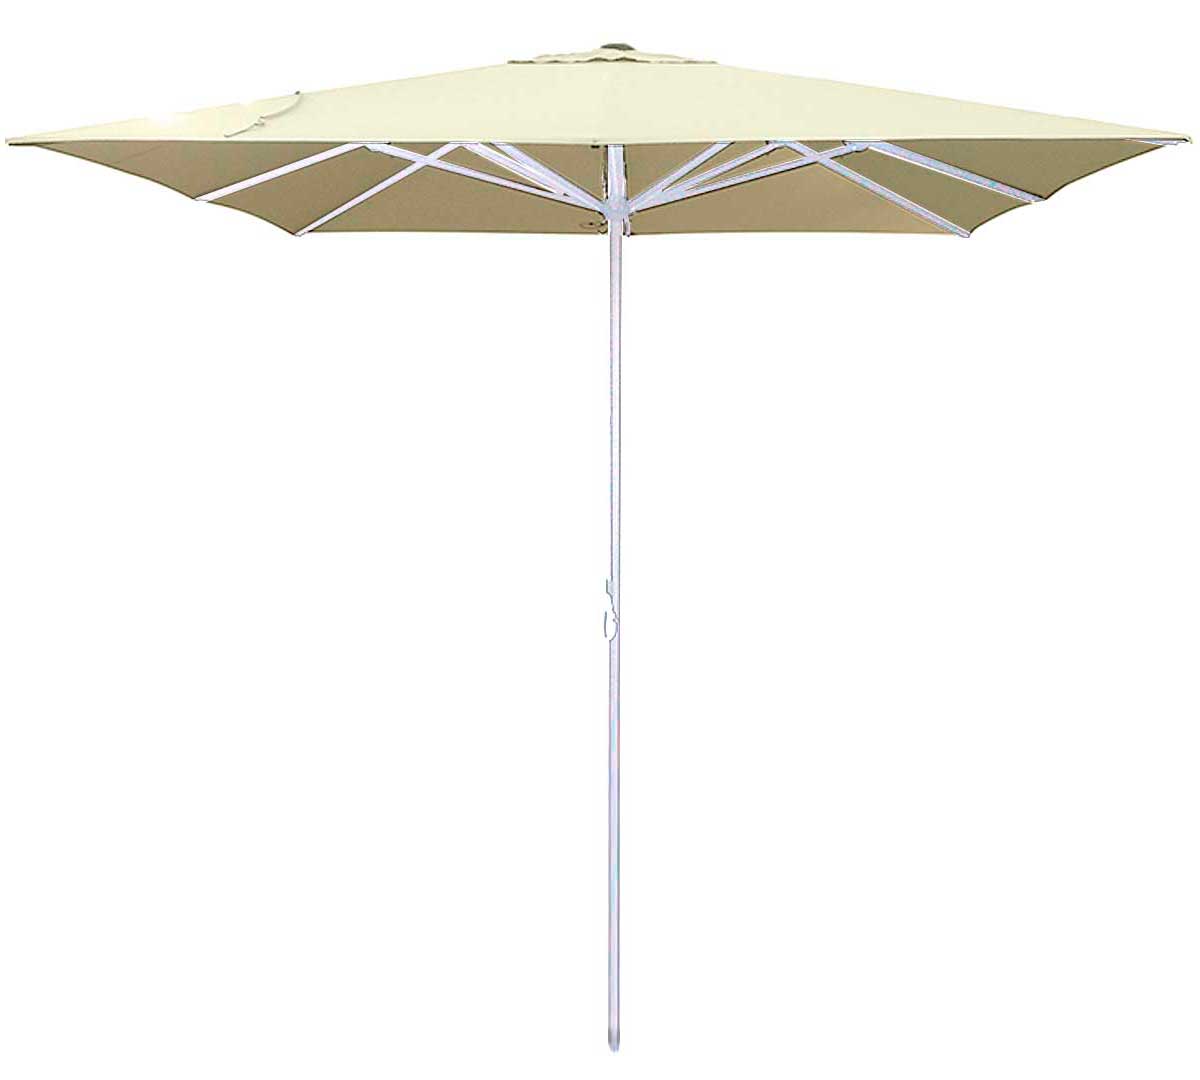 conva-parasol-heavy-duty-3×2-poliester-01